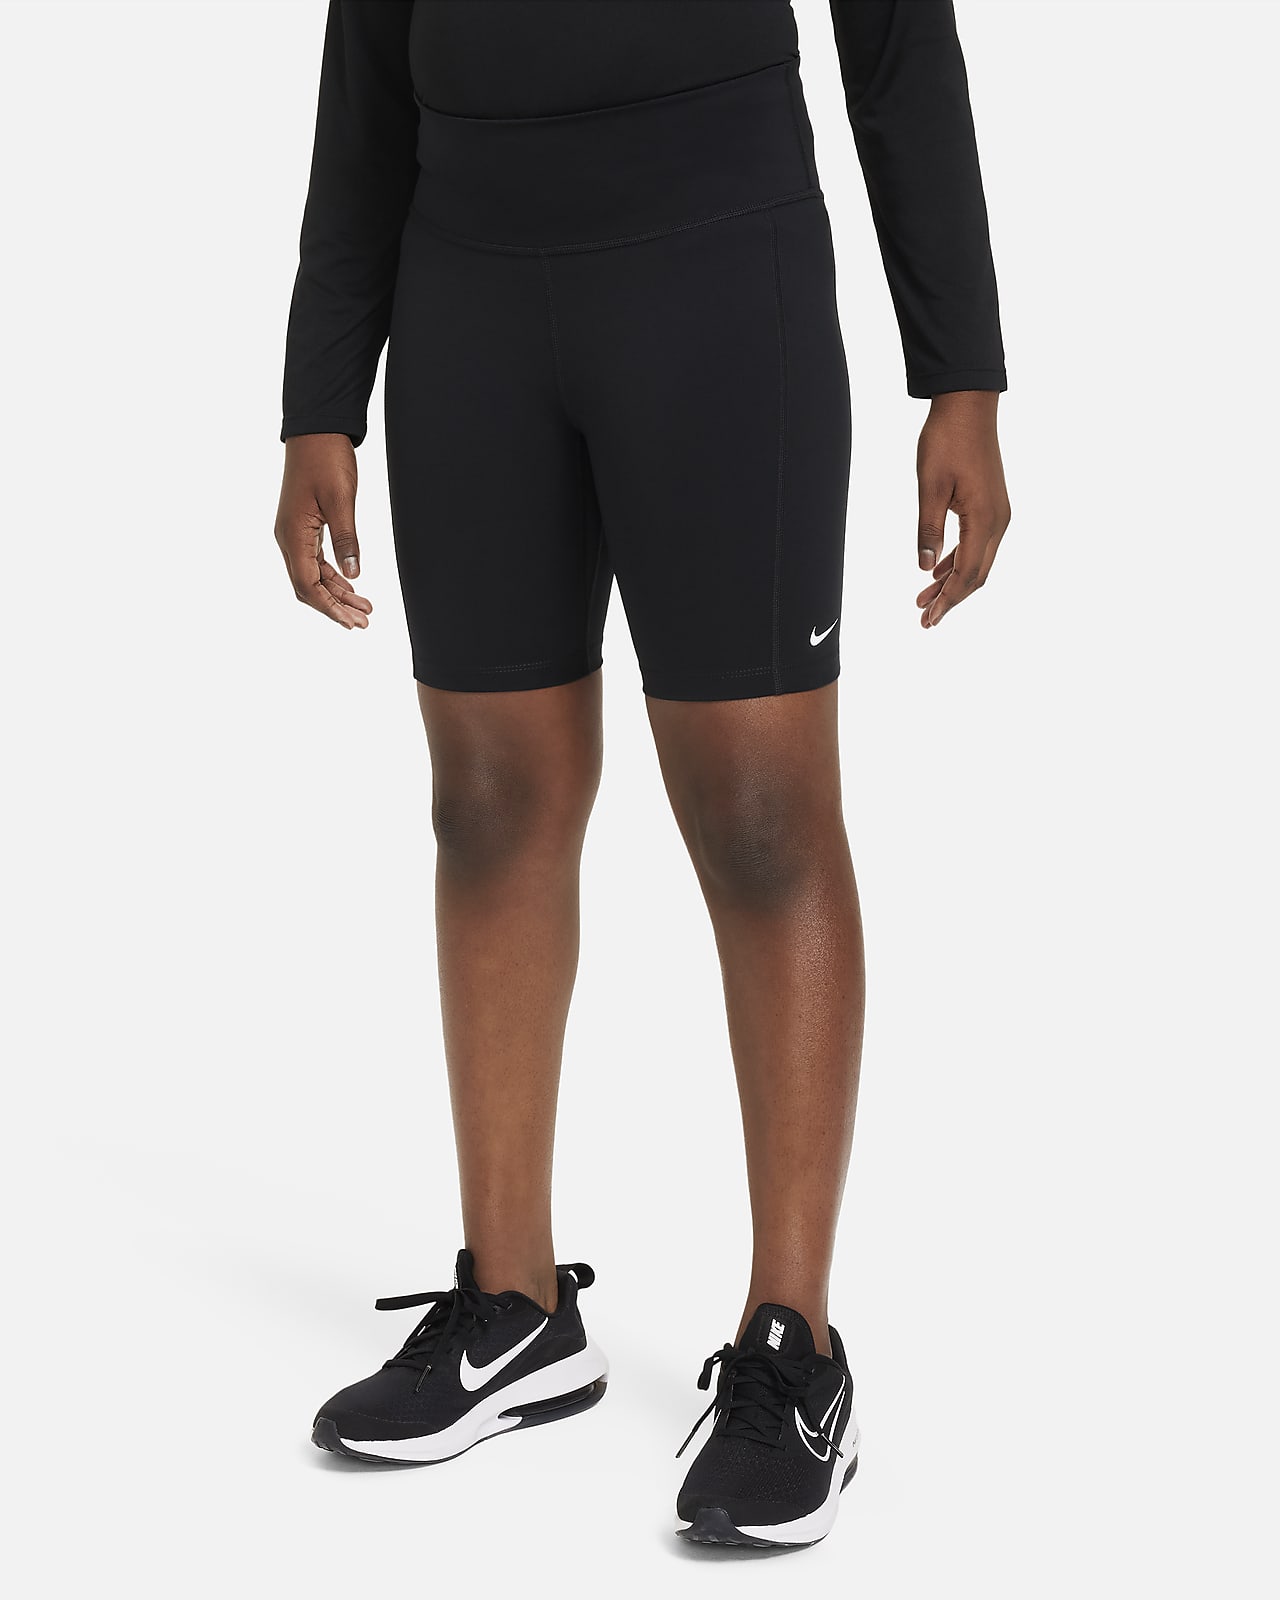 Ultra Game Men's NBA Super-Soft Reversible Training Workout Shorts